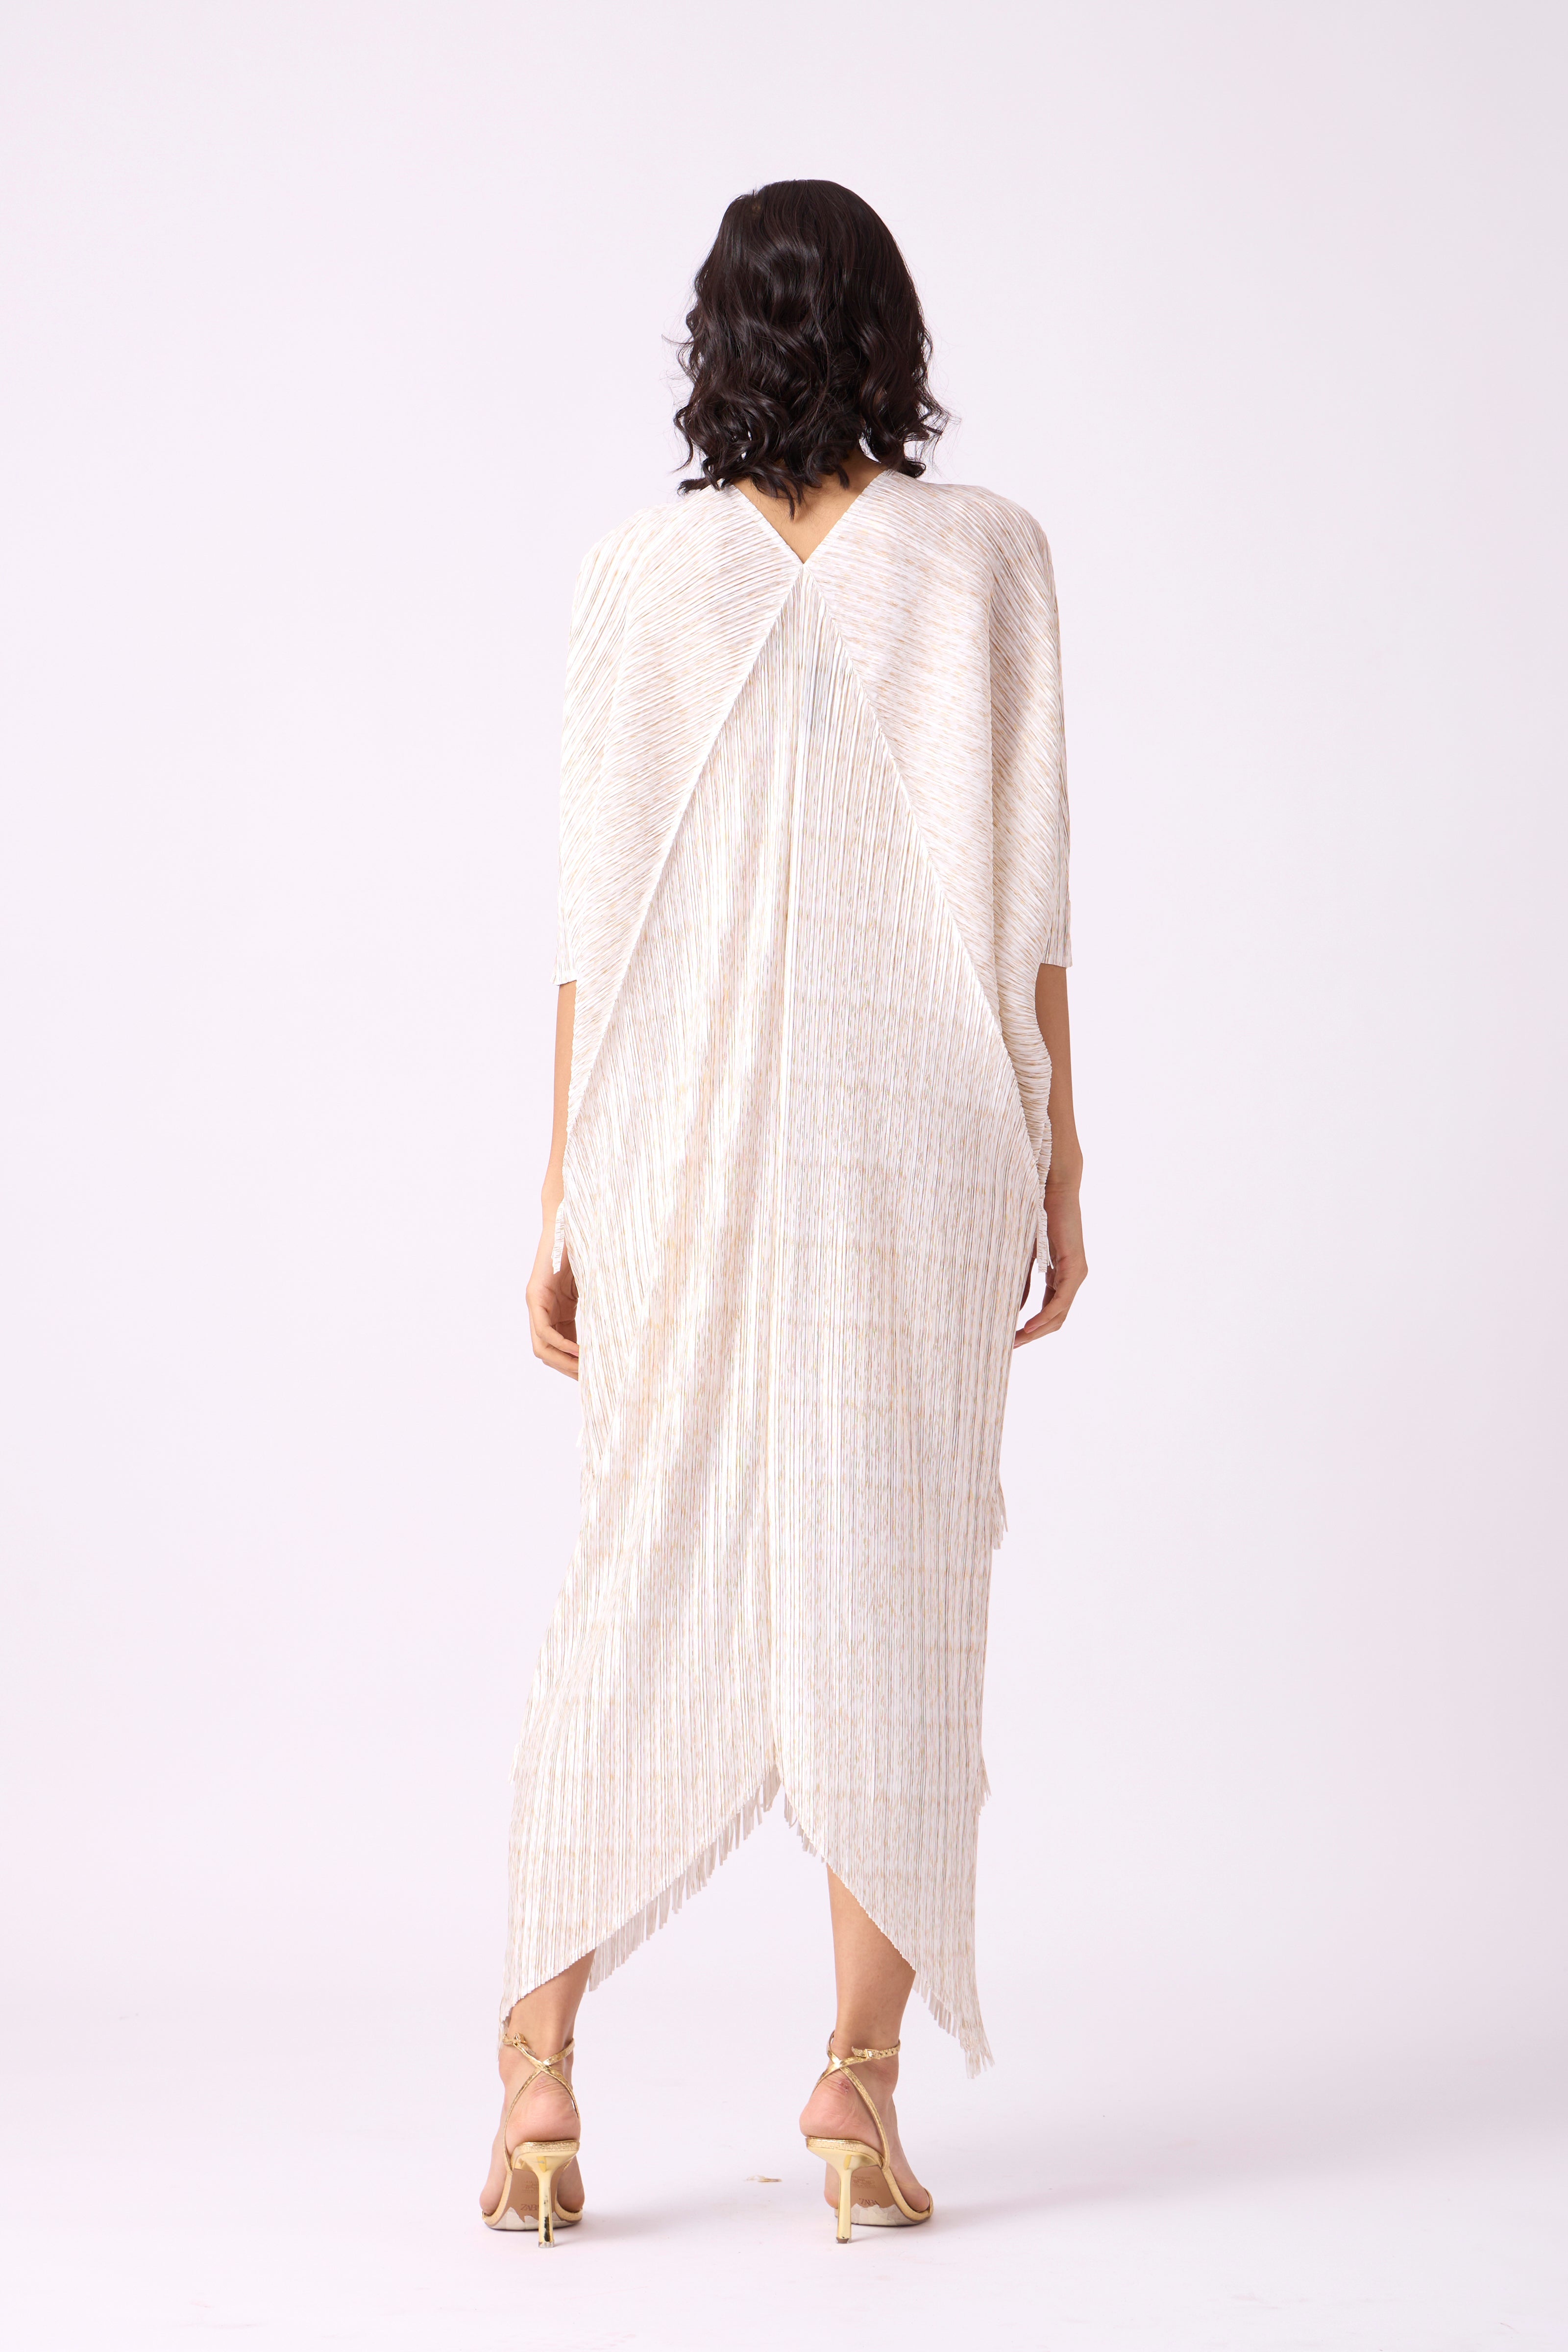 Kimono Fringe Dress - Metallic White